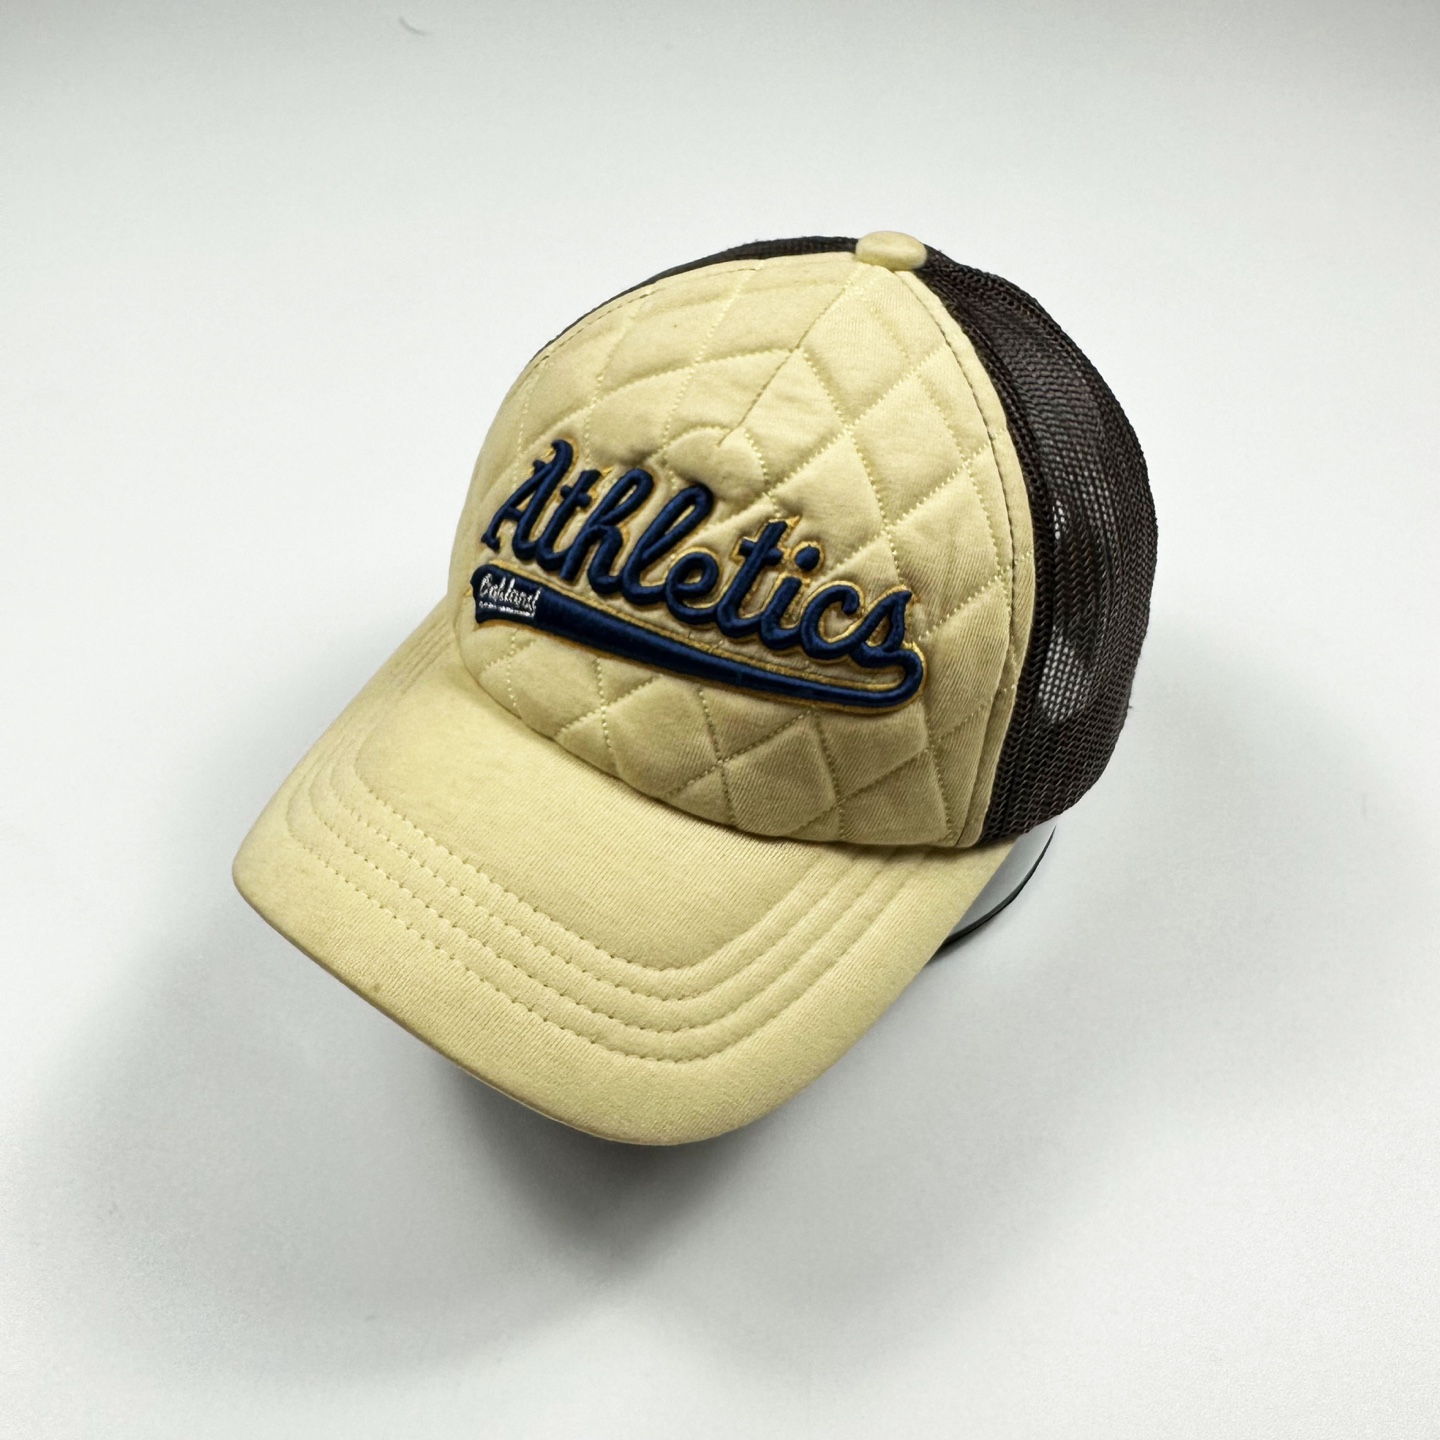 MLB 메쉬캡 모자